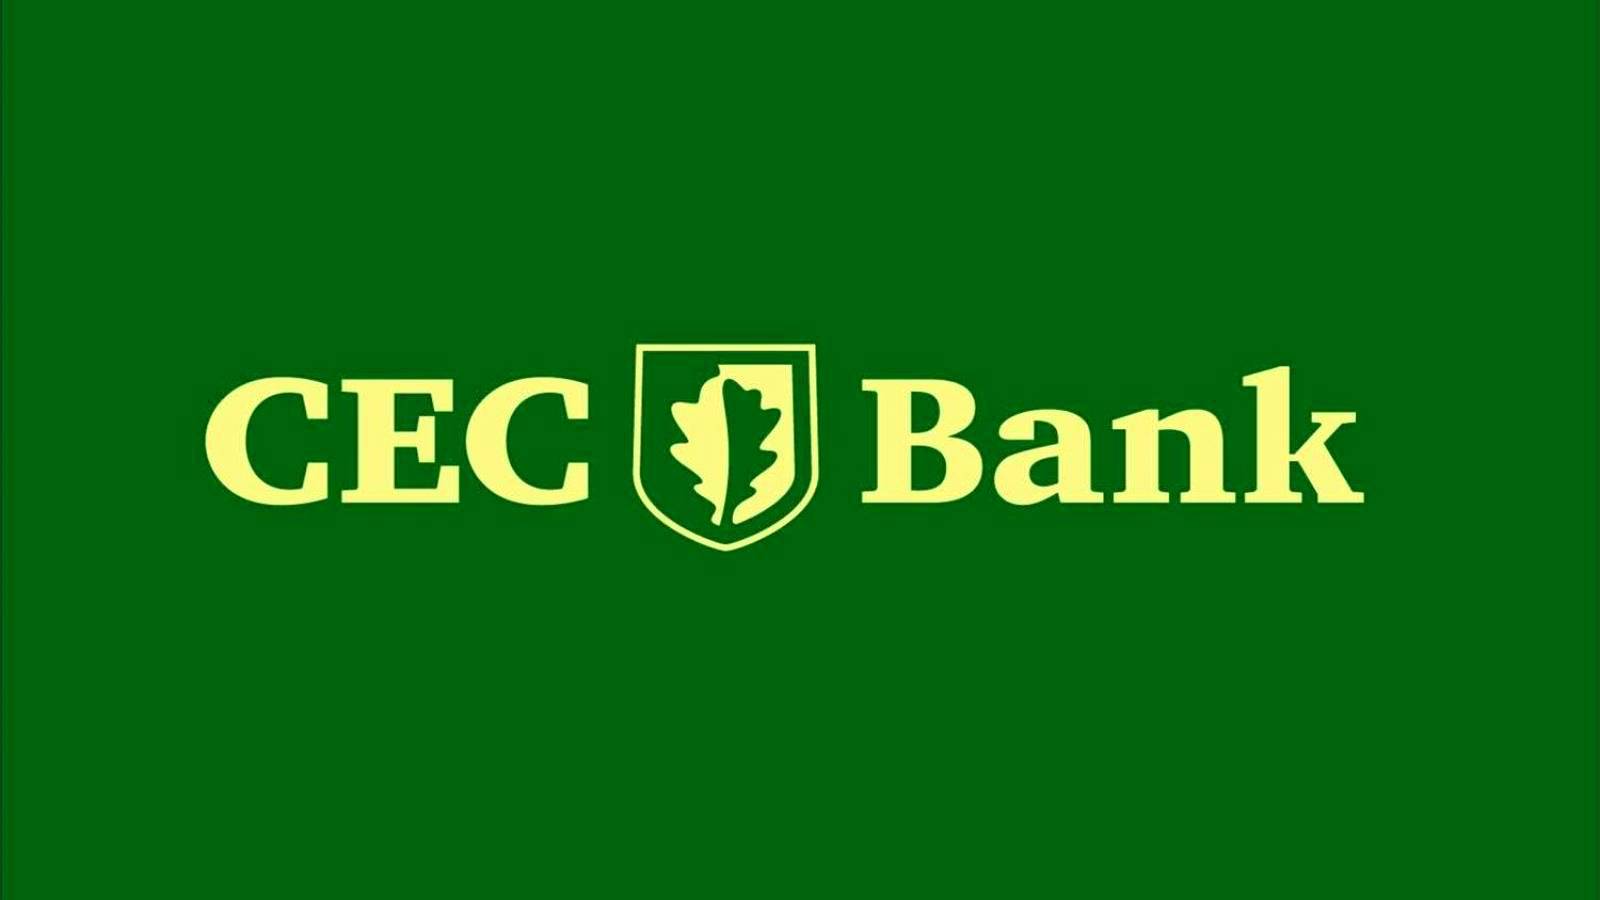 CEC Bank Cati Romani Imprumuta Vacante Cati Nu Merg Deloc